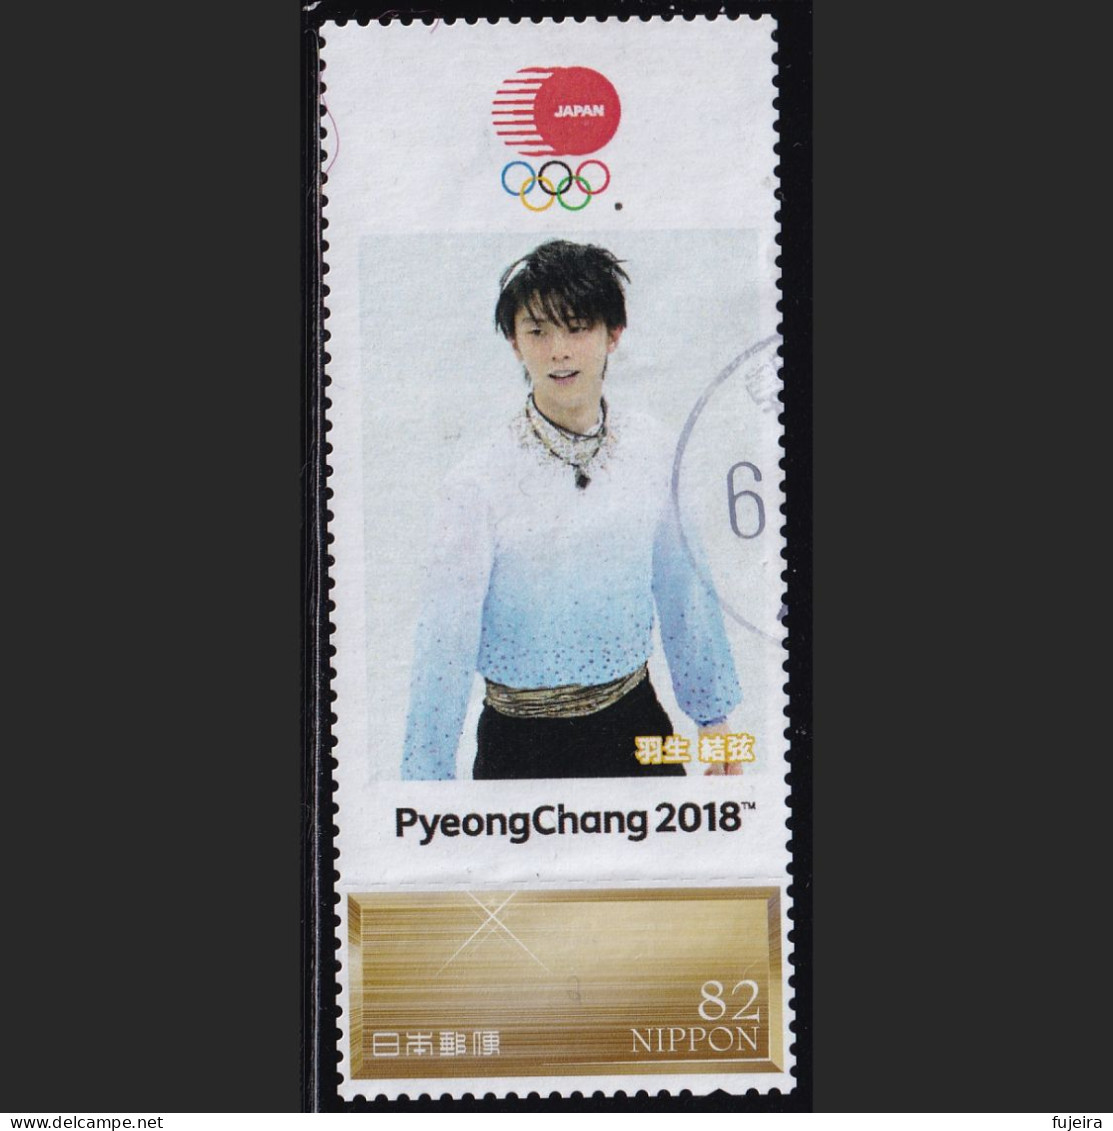 Japan Personalized Stamp, PyeonChang 2018 Olympic Hanyu Yuzuru Figure Skate (jpv9603) Used - Used Stamps